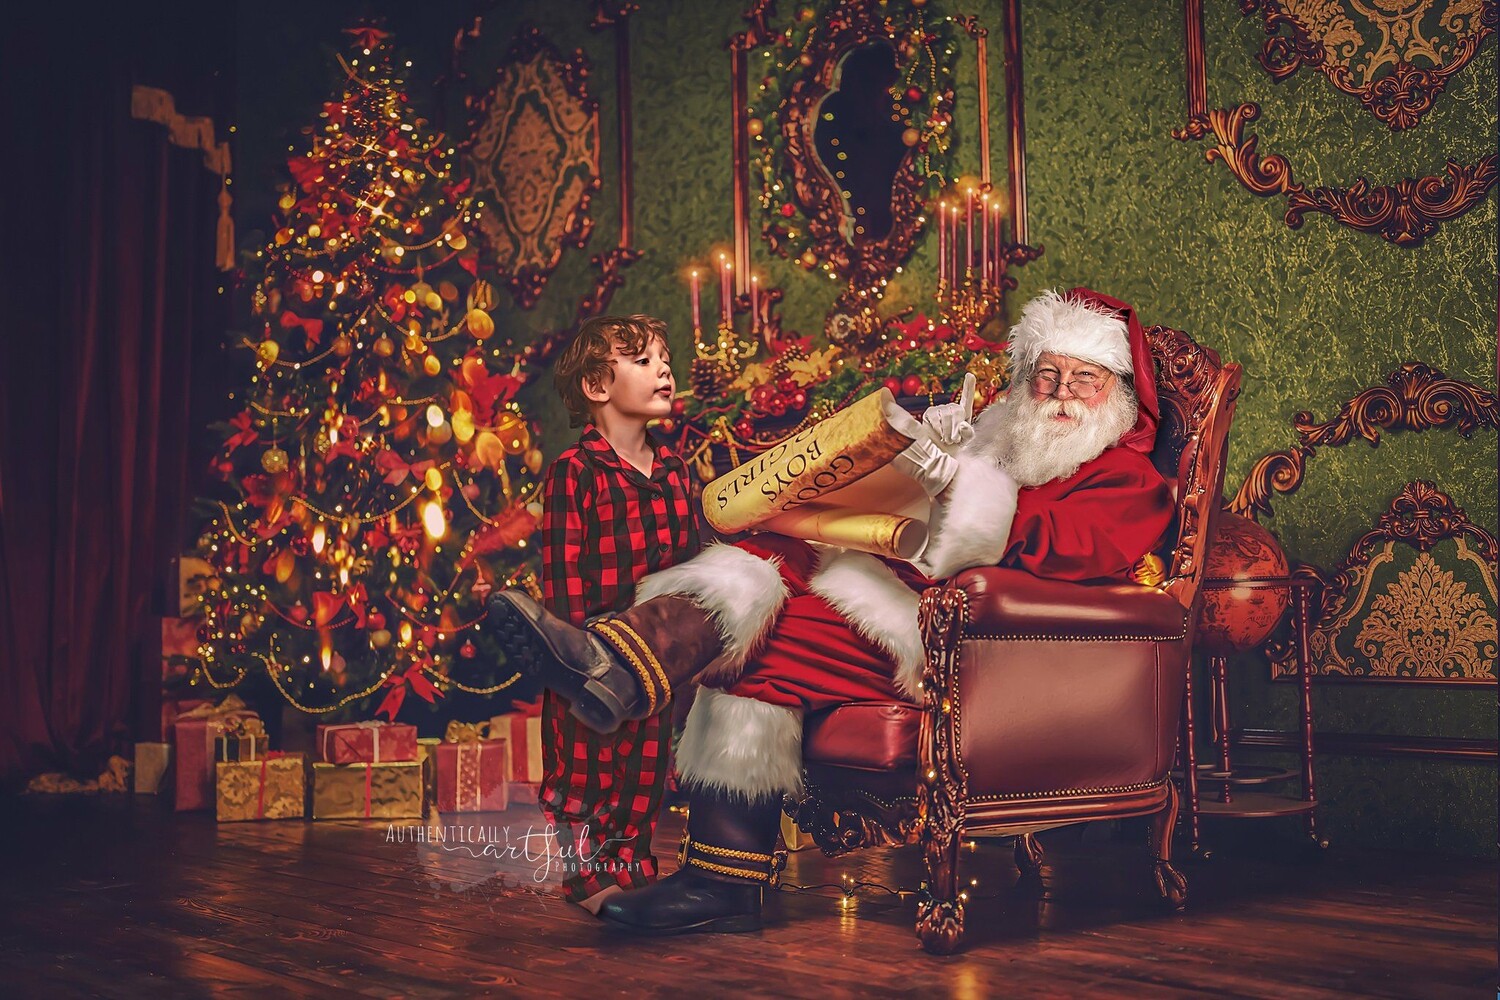 Santa by Fireplace Reading Good List - Santa Scroll - The Good List - Christmas Holiday Digital Background Backdrop